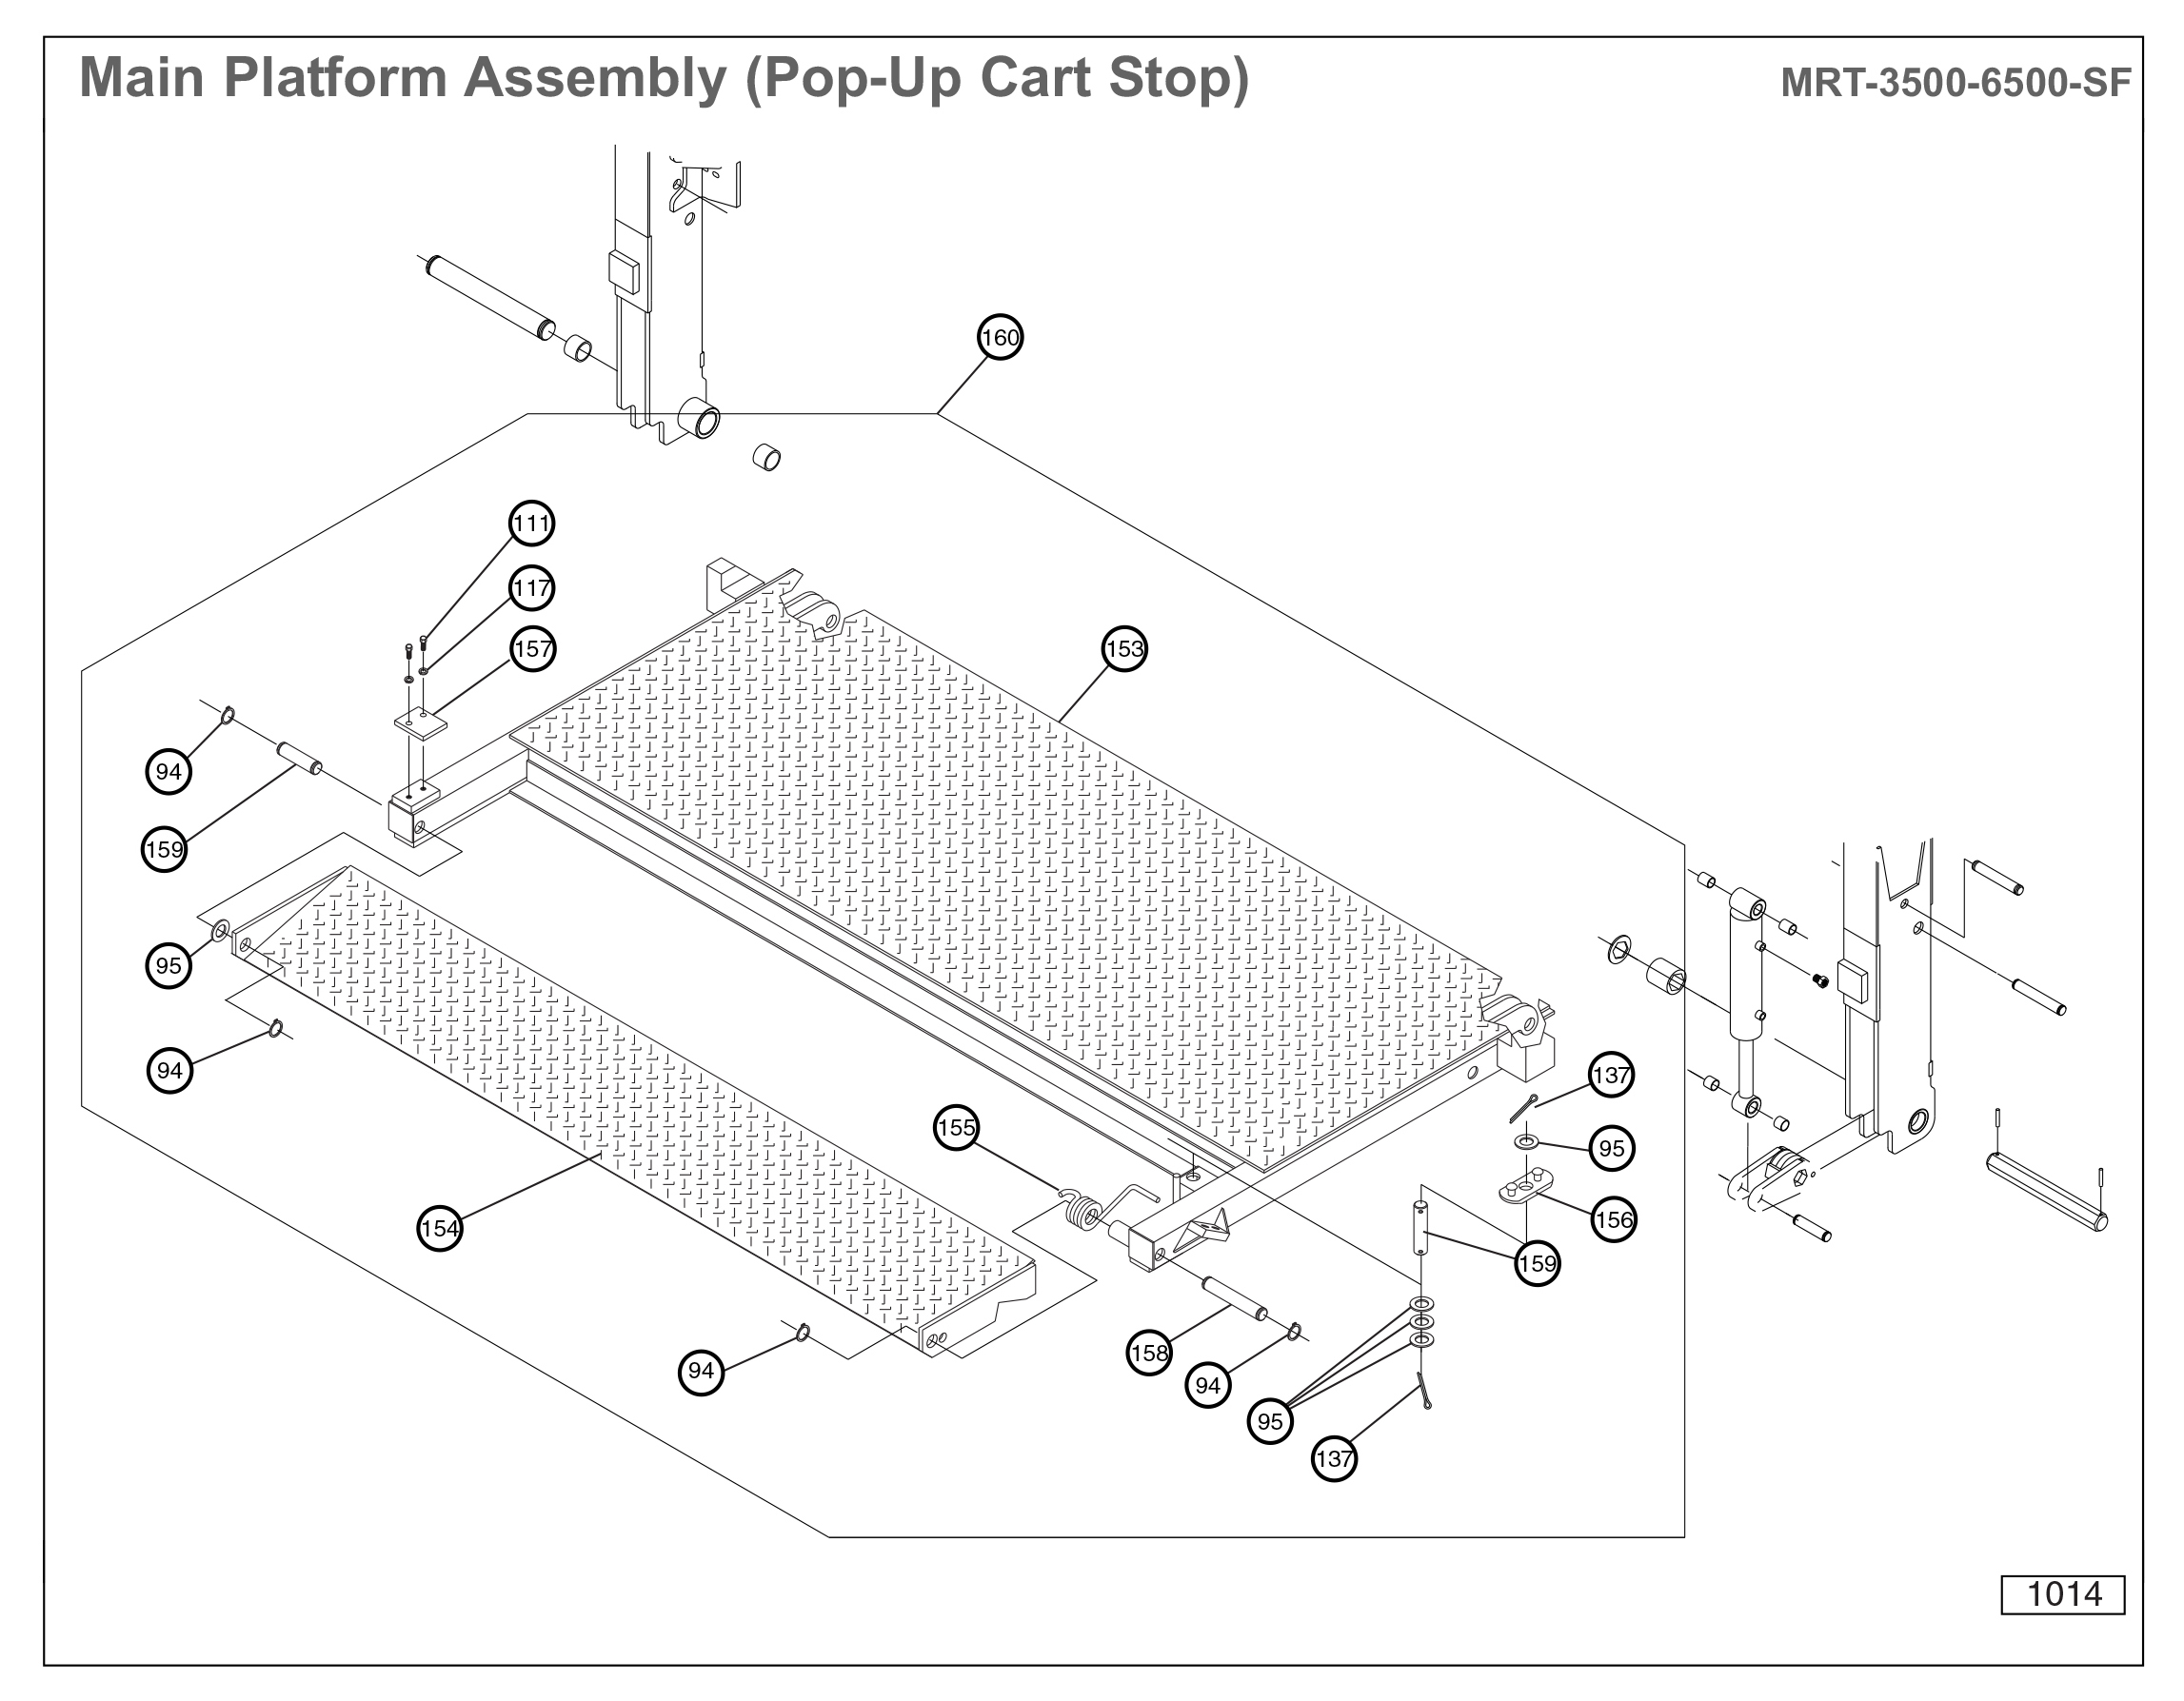 Anthony MRT-3500-6500-SF Main Platform Assembly (Pop-Up Cart Stop) Diagram